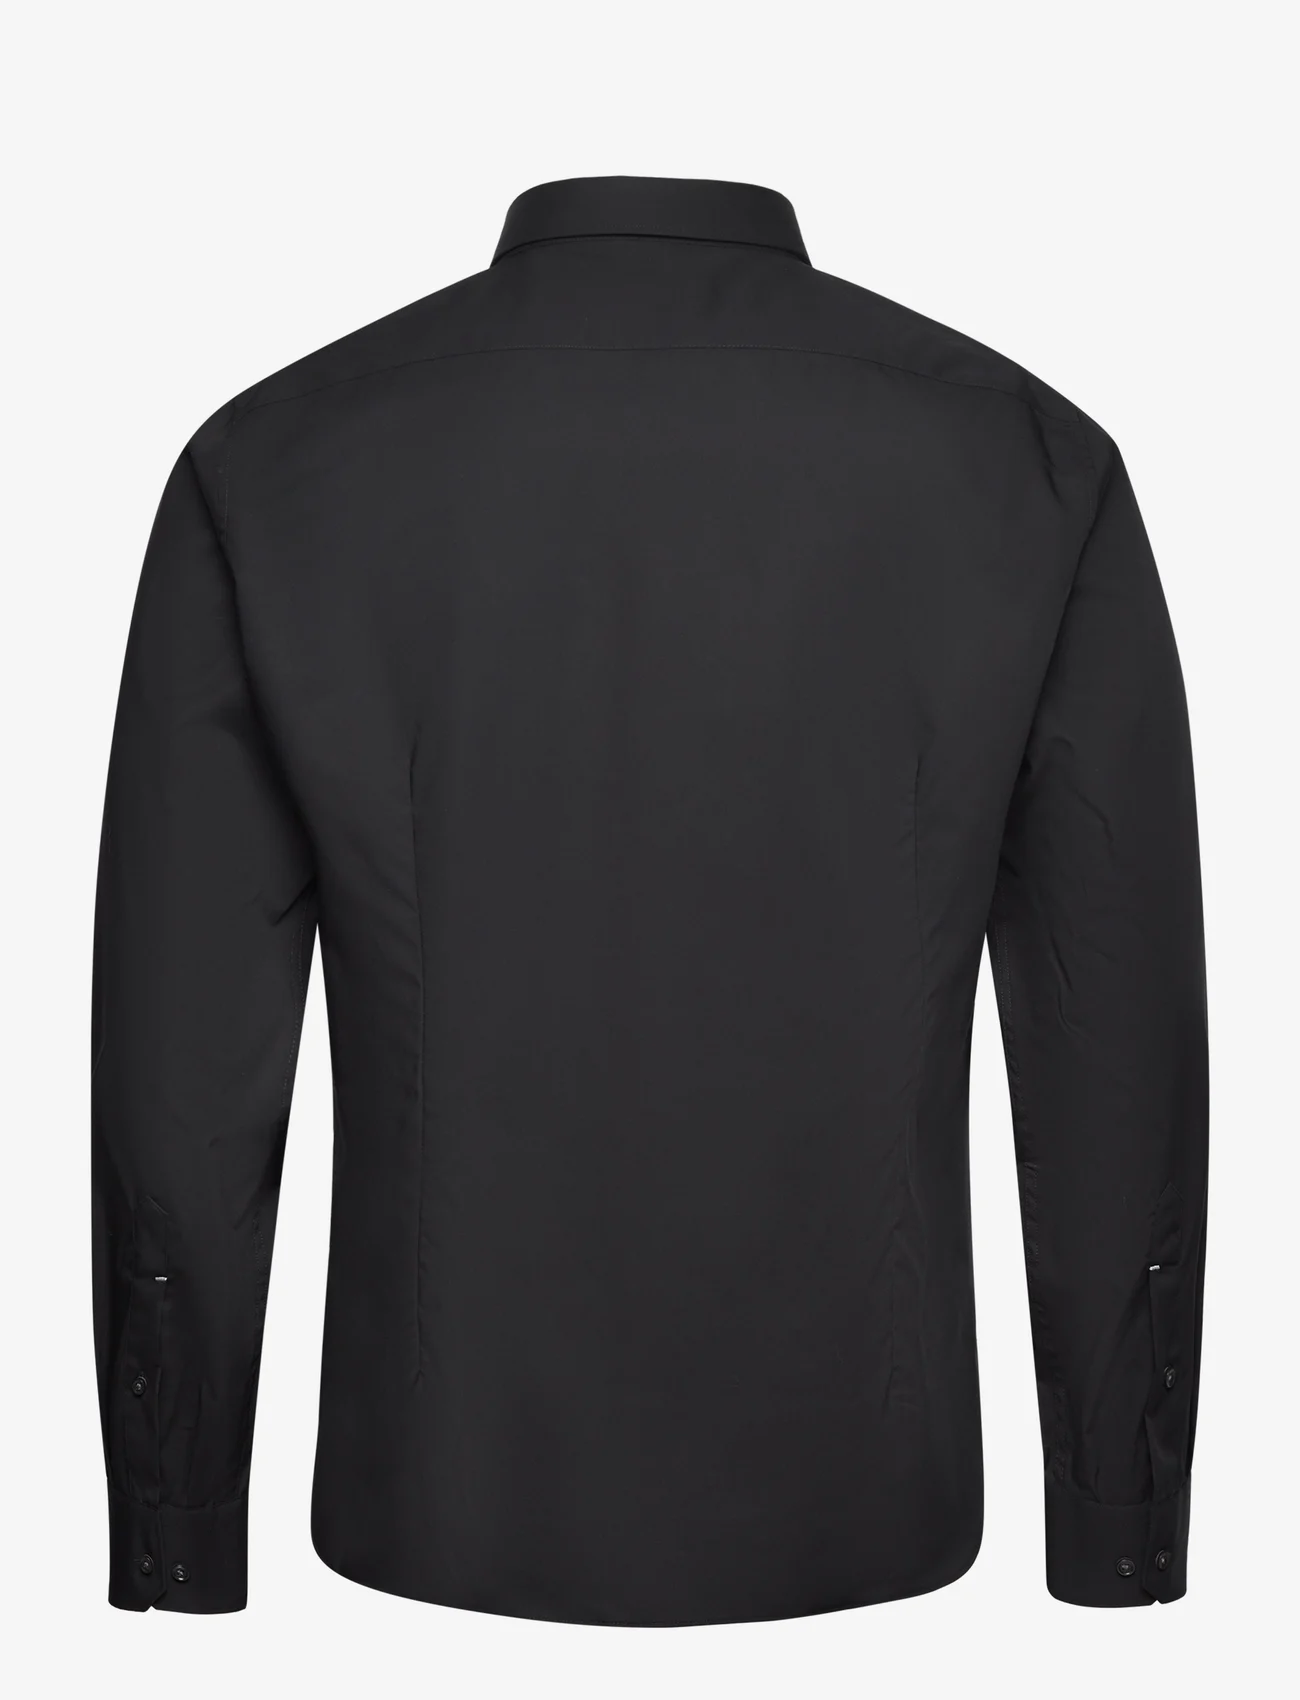 Michael Kors - POPLIN STRETCH MODERN SHIRT - basic shirts - black - 1